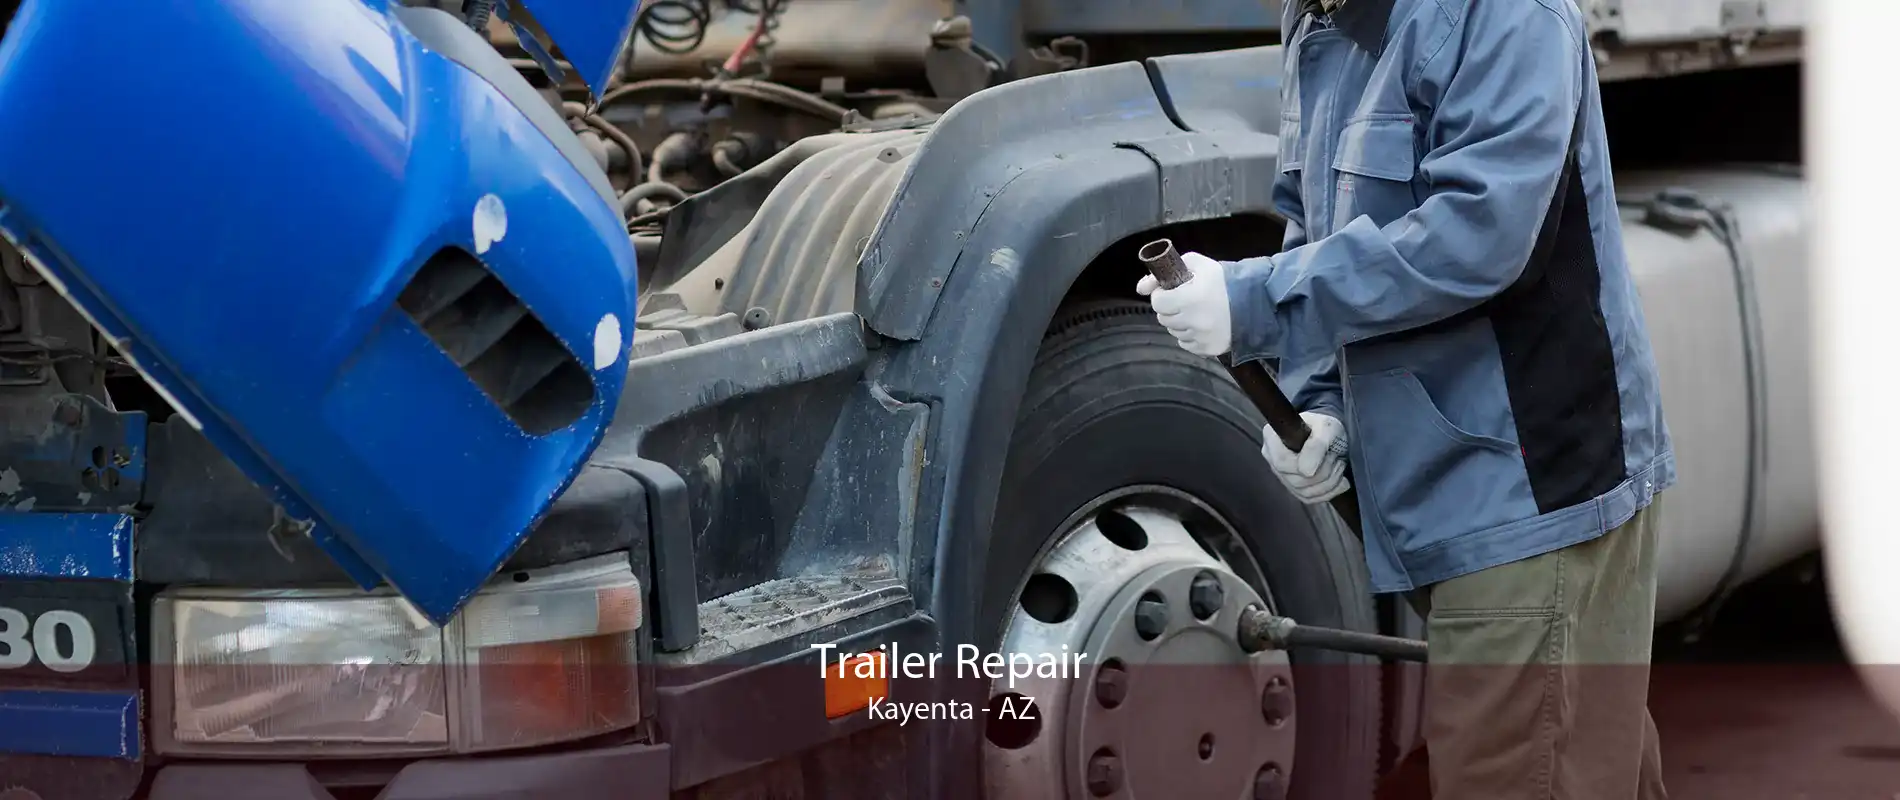 Trailer Repair Kayenta - AZ